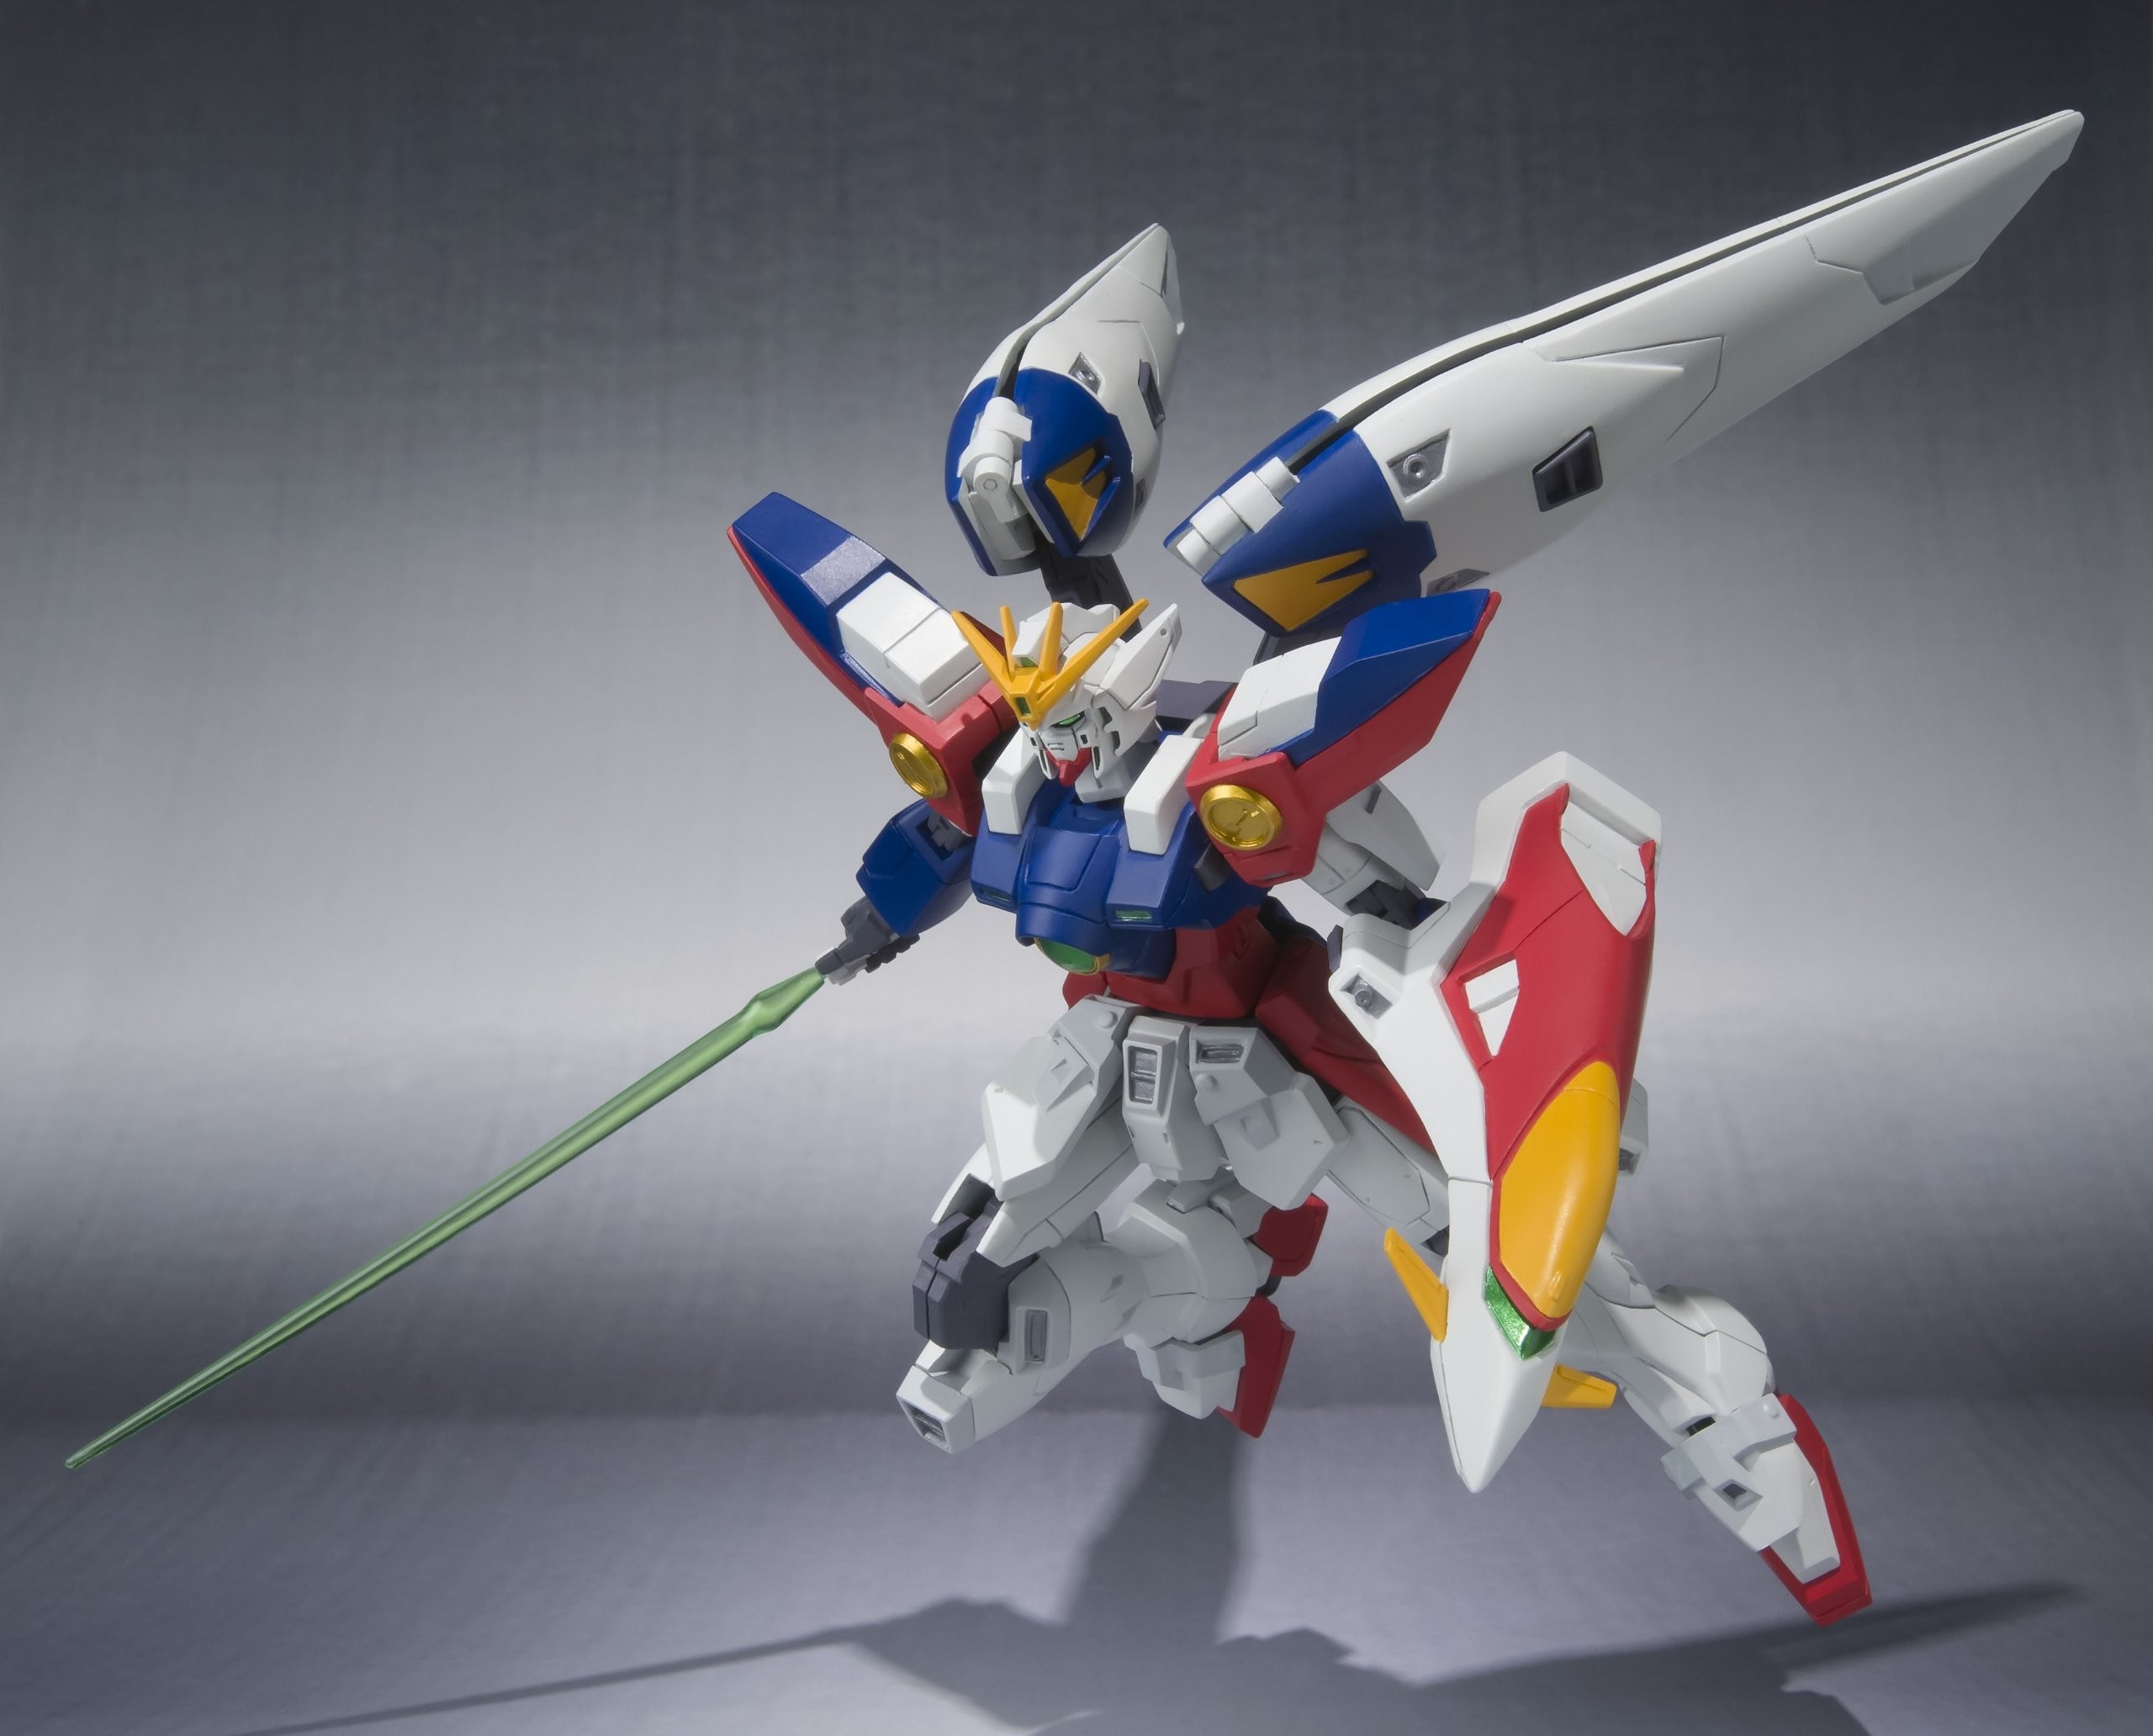 2560x2064 ... Wing Gundam Zero: Official Wallpaper Size Images. ROBOT ...